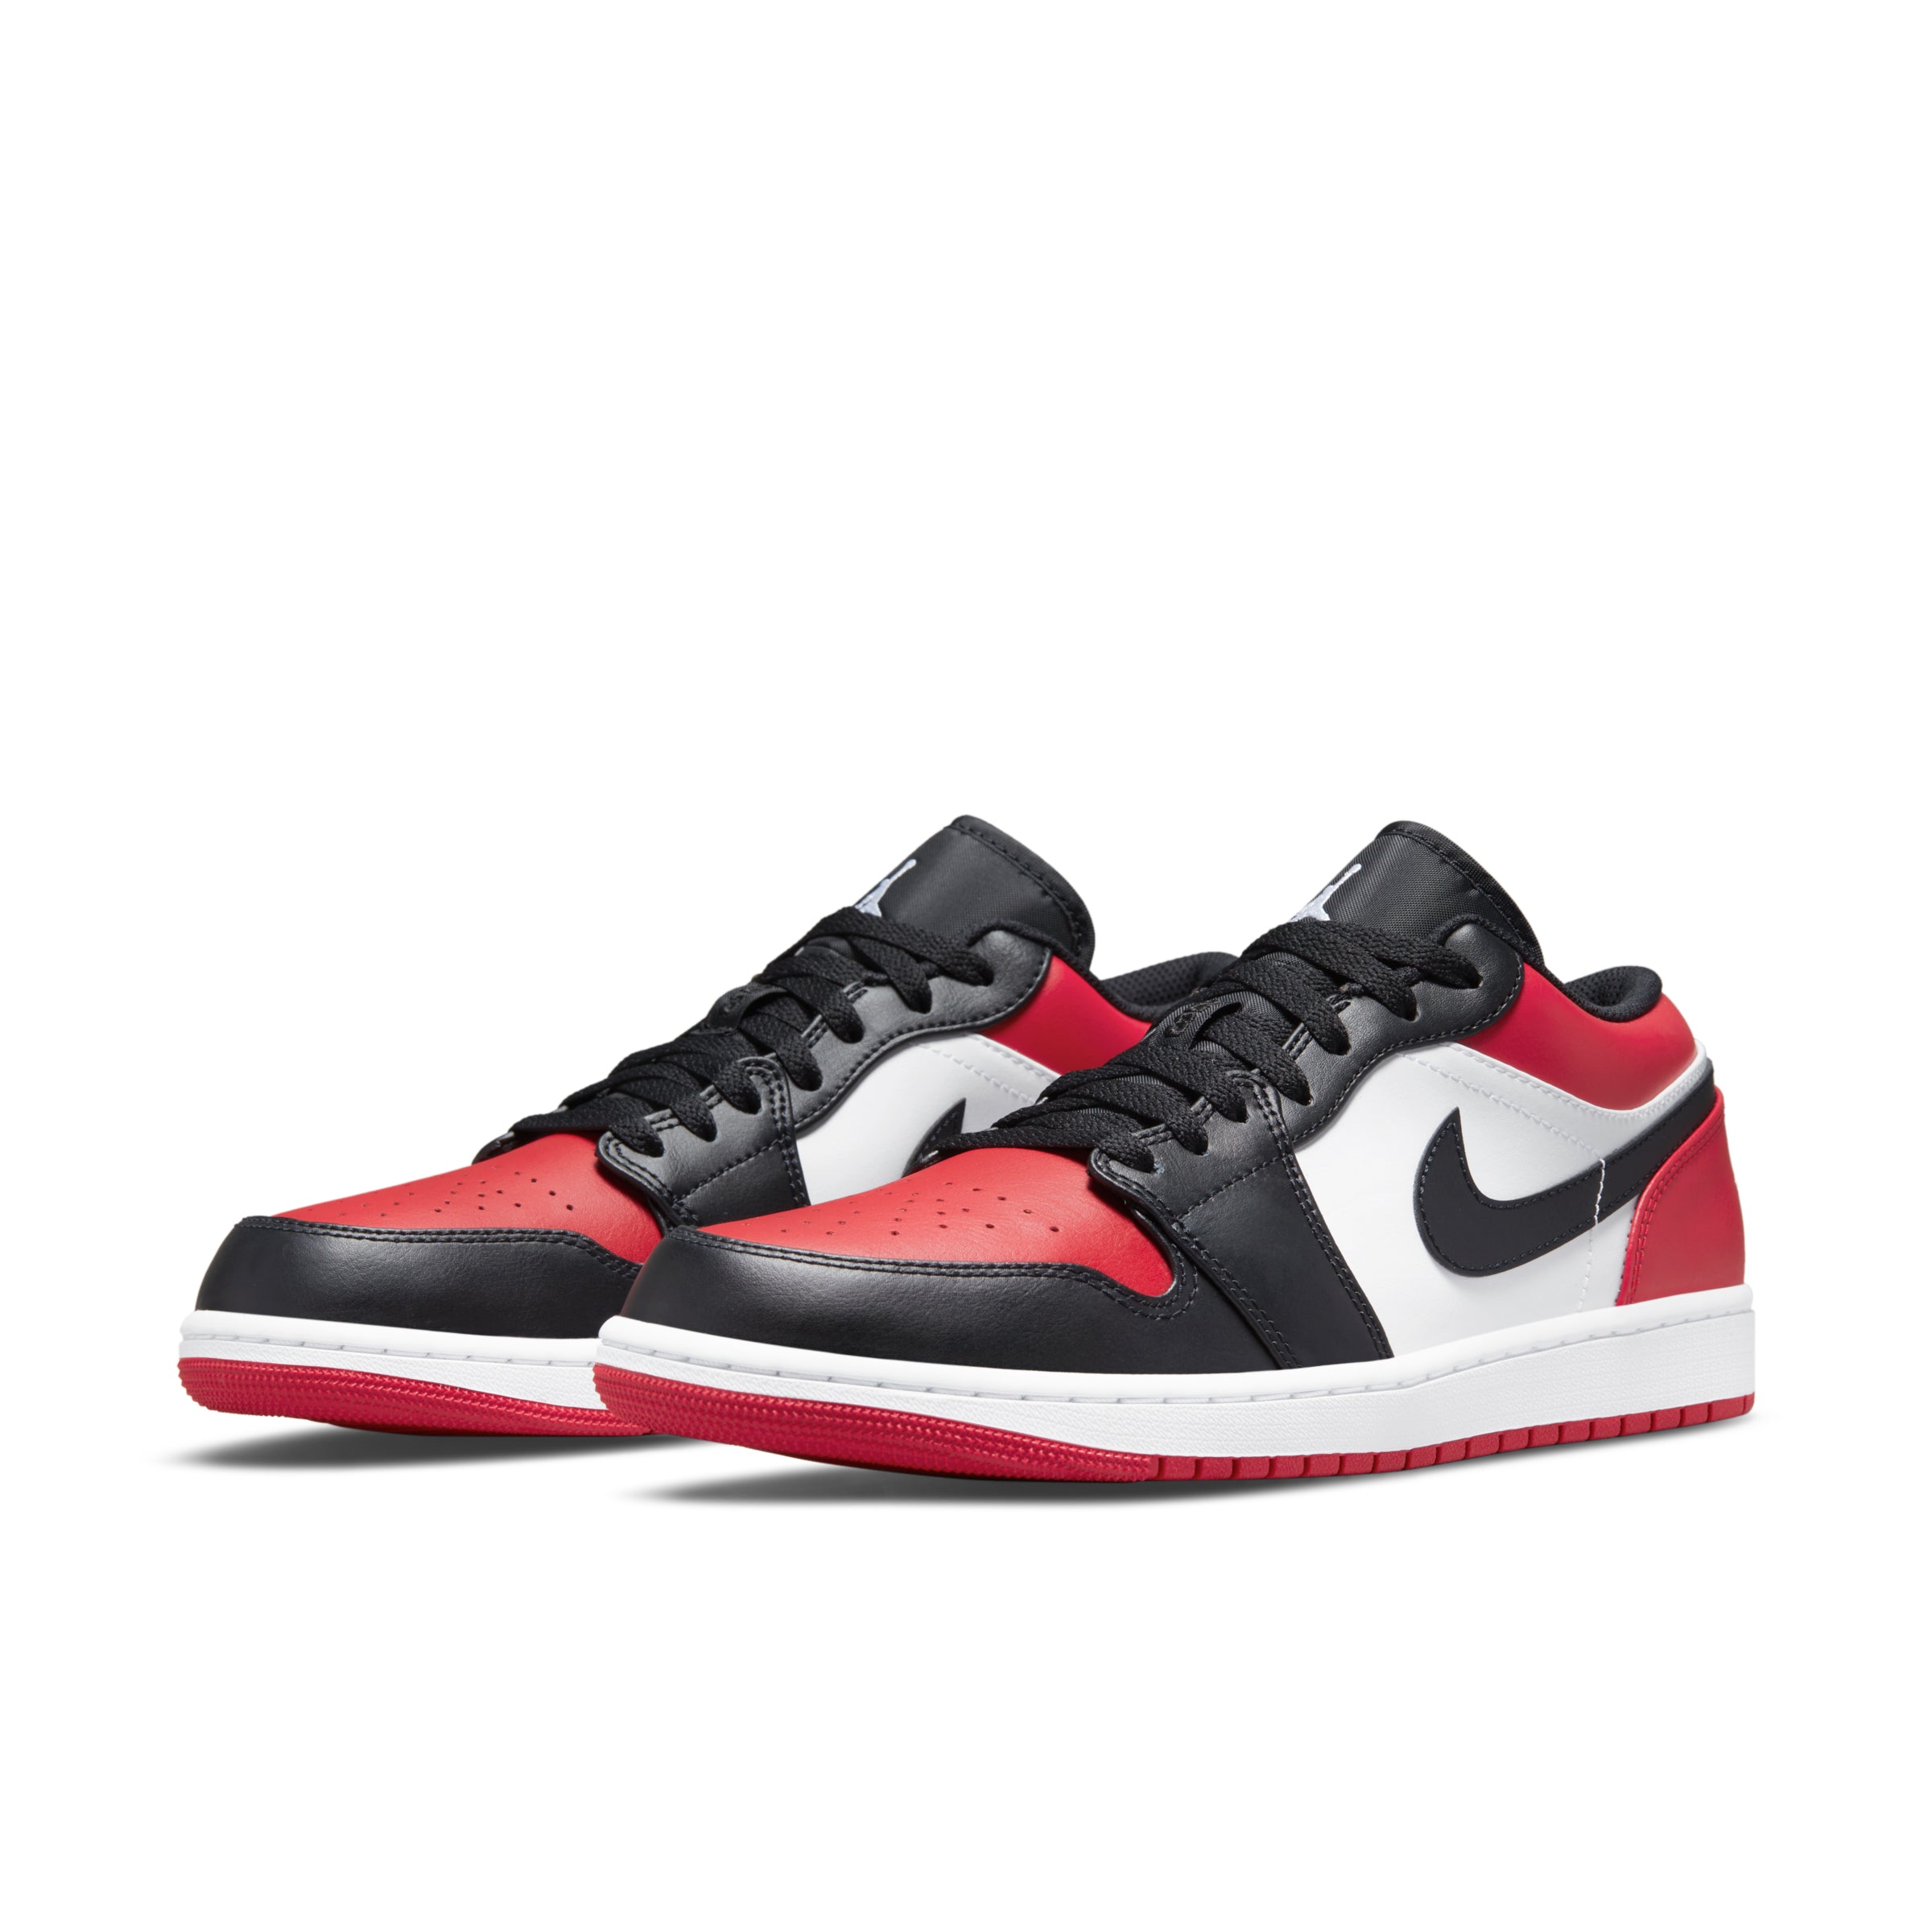 Nike Air Jordan 1 Low Bred Toe – BNIB